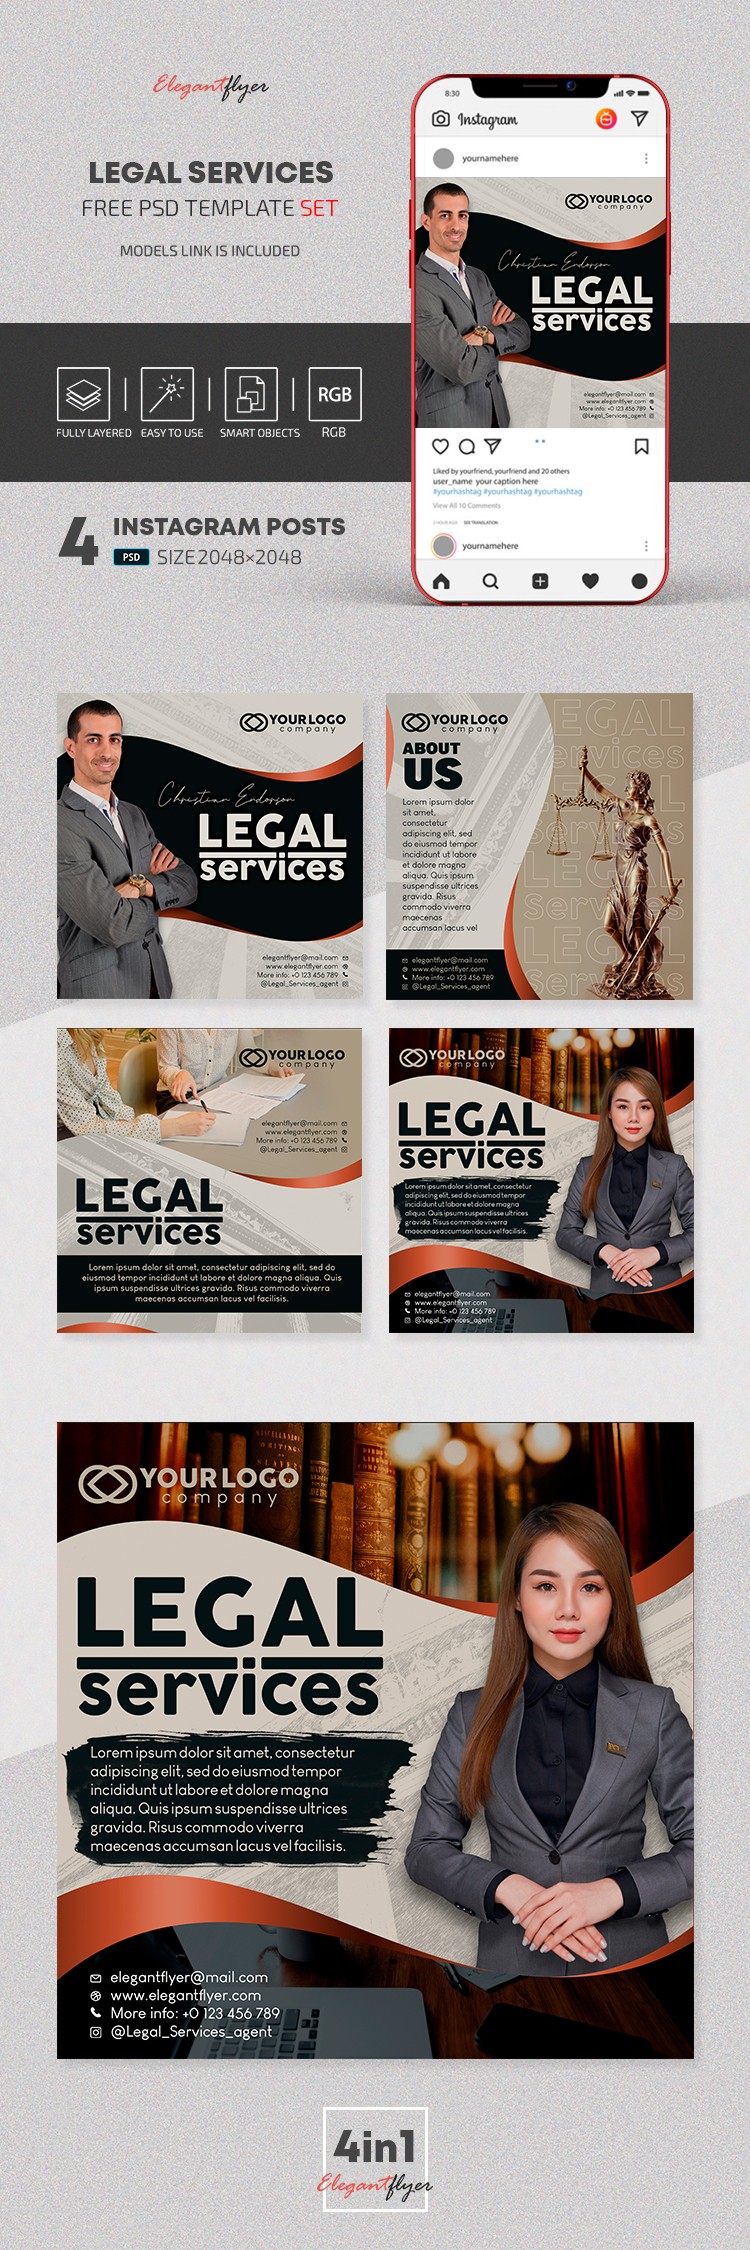 Legal Services Instagram by ElegantFlyer